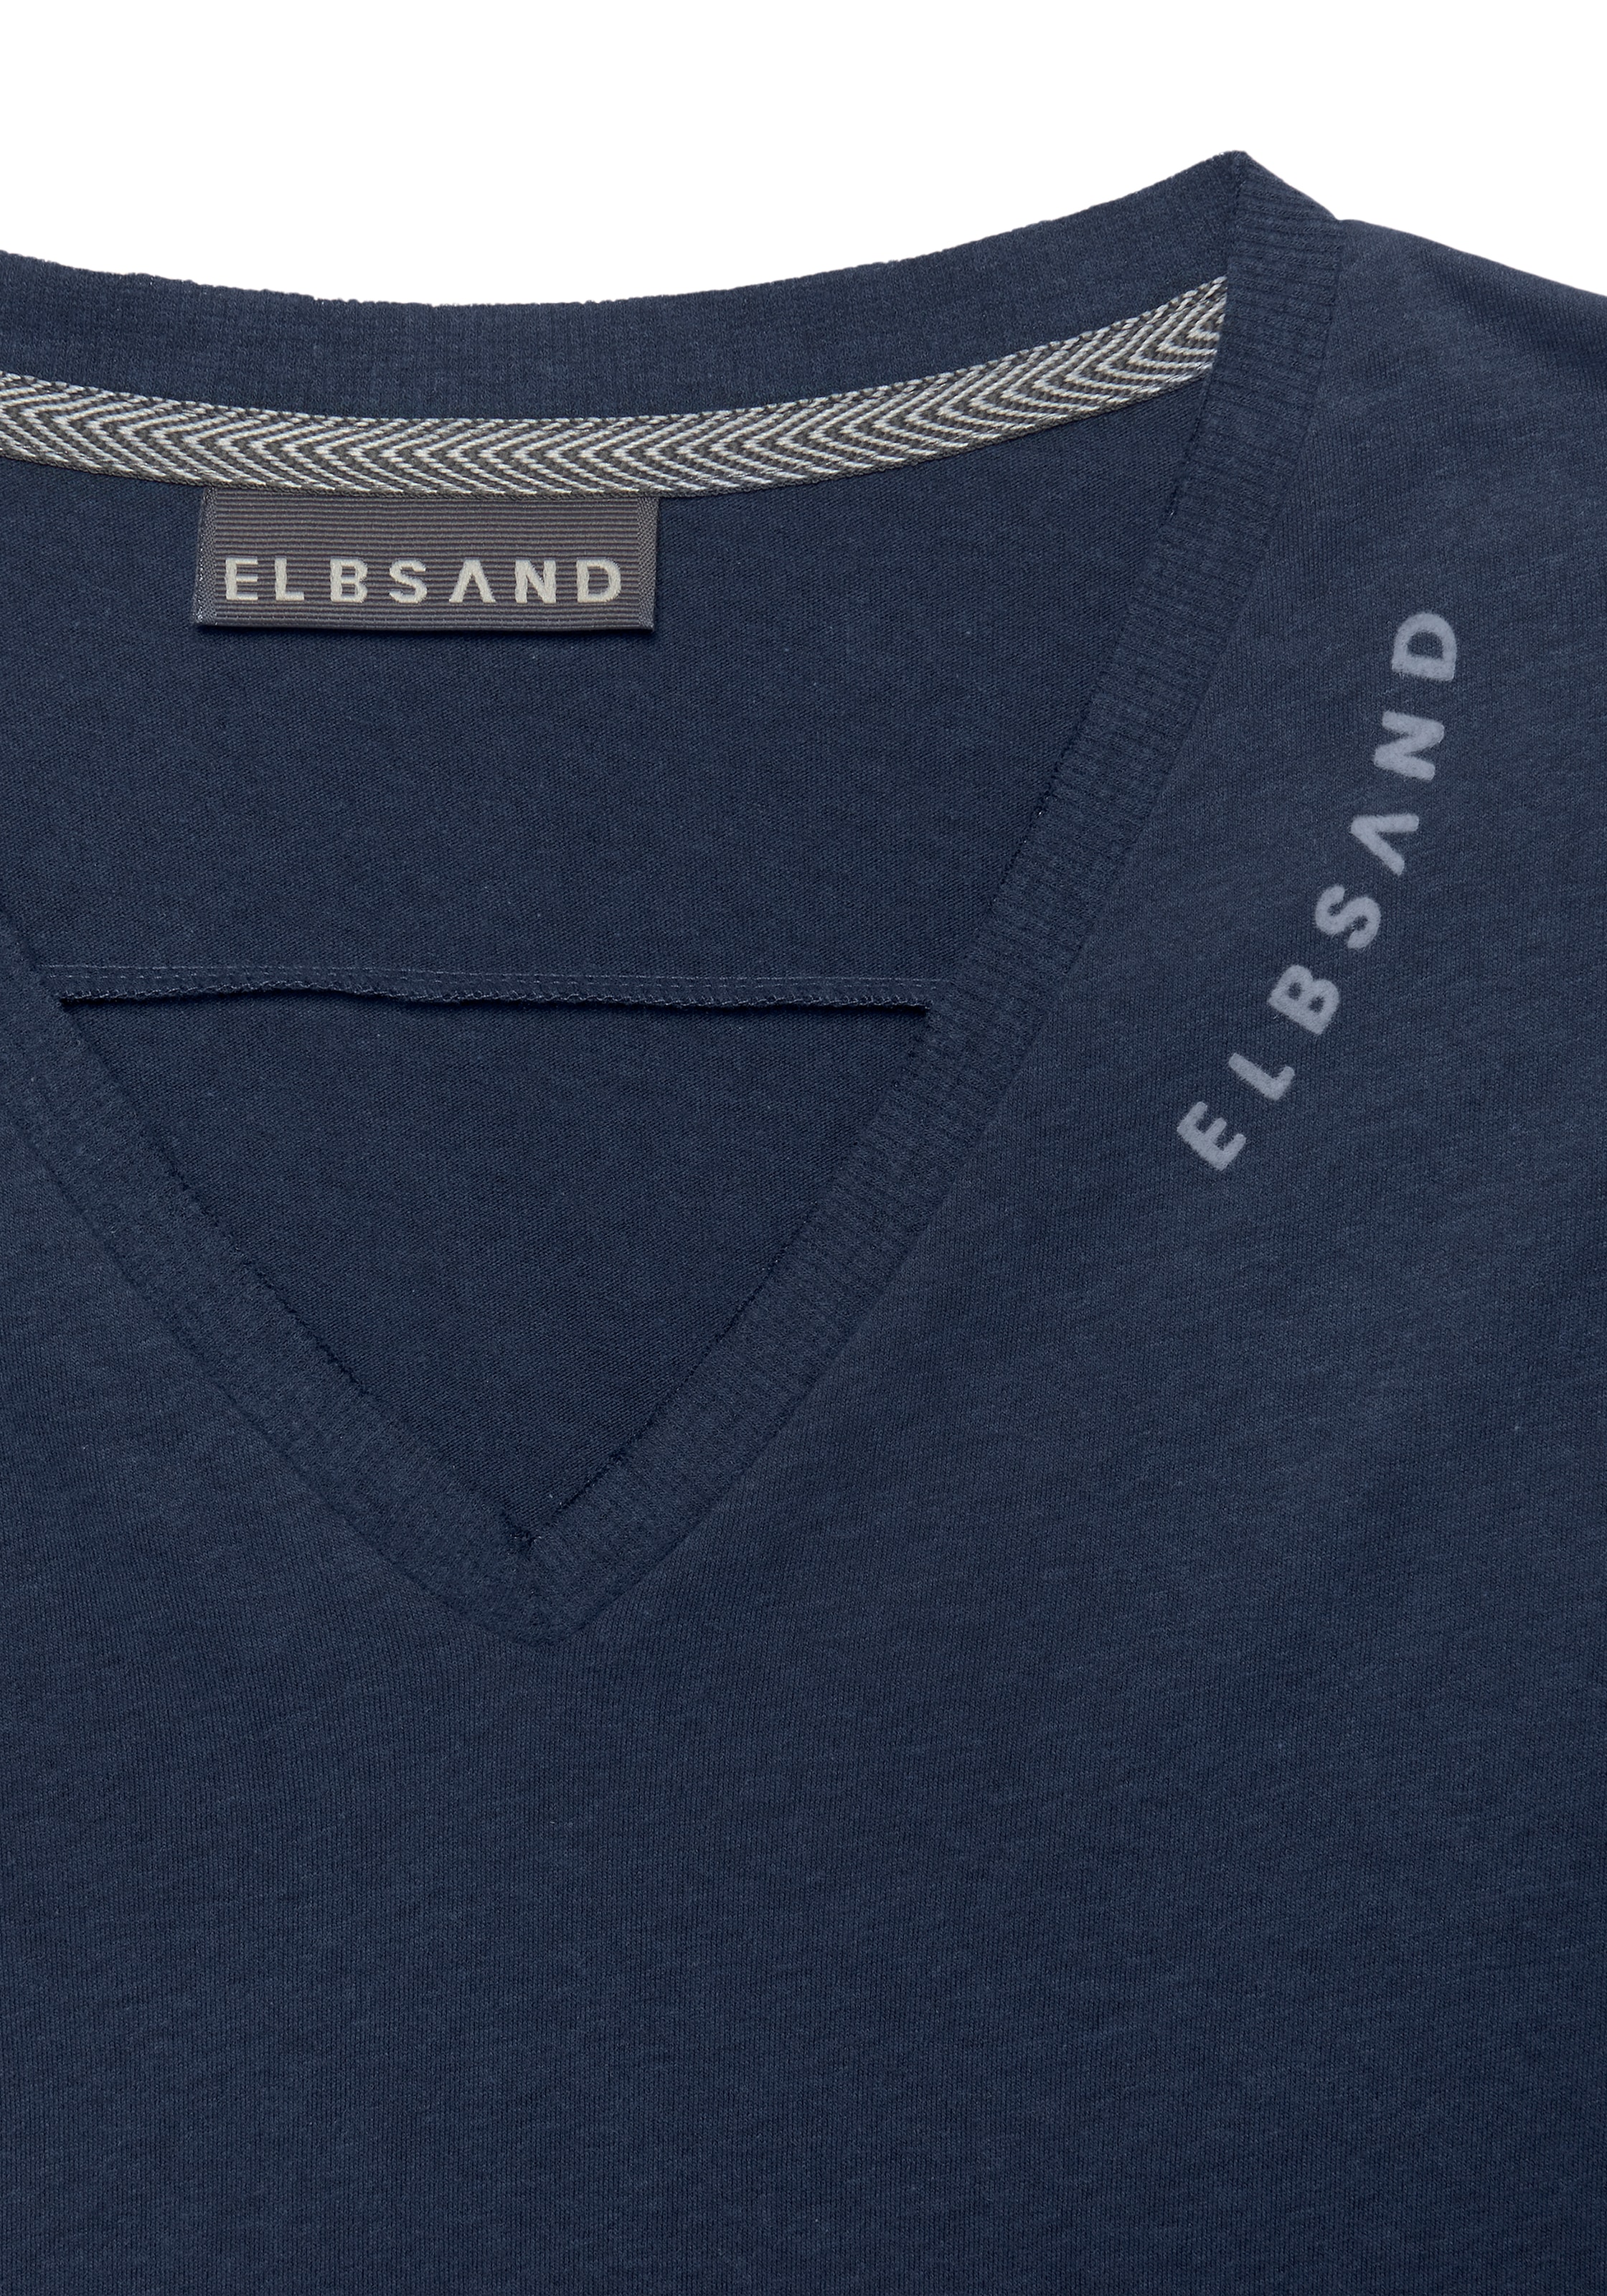 bestellen »Talvi«, T-Shirt mit online Elbsand Flockprint